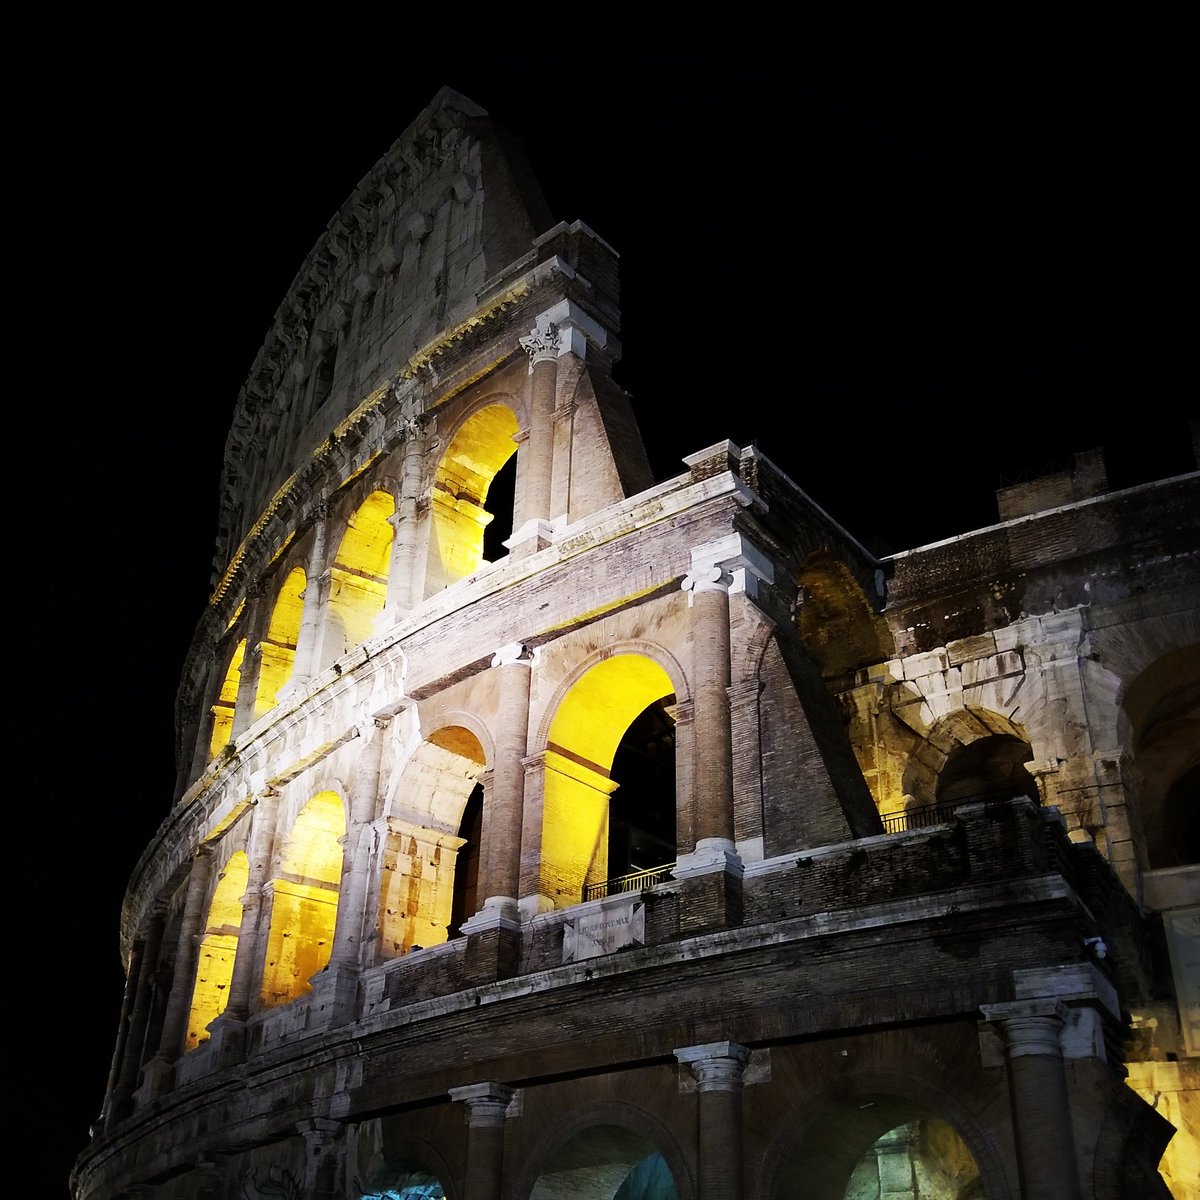 Colosseum is even more beautiful at night. #visititalia #visitrome #travel #TravelPhotography